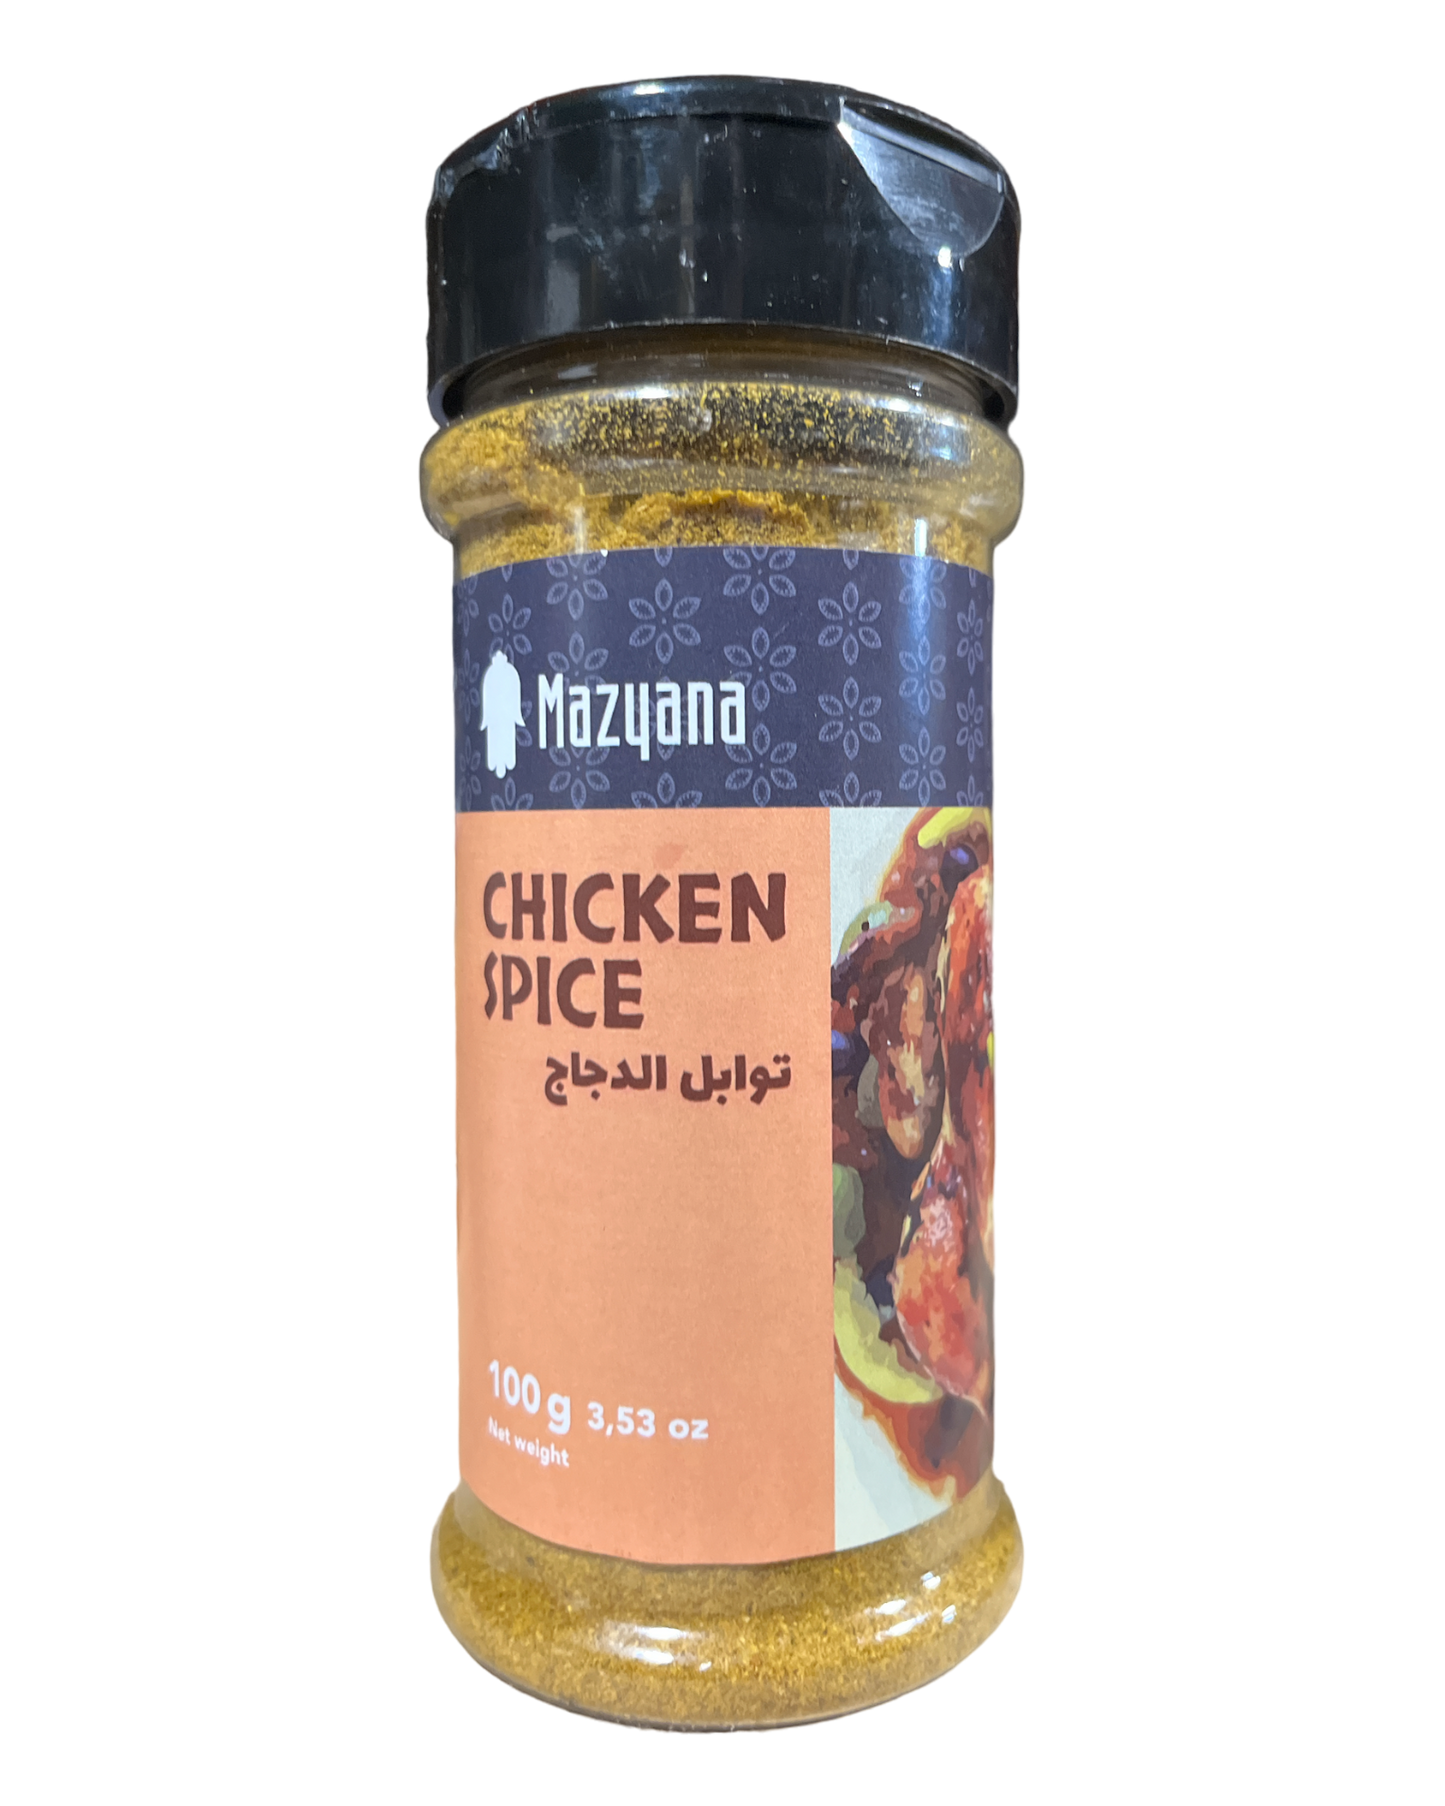 Mazyana Moroccan Spices